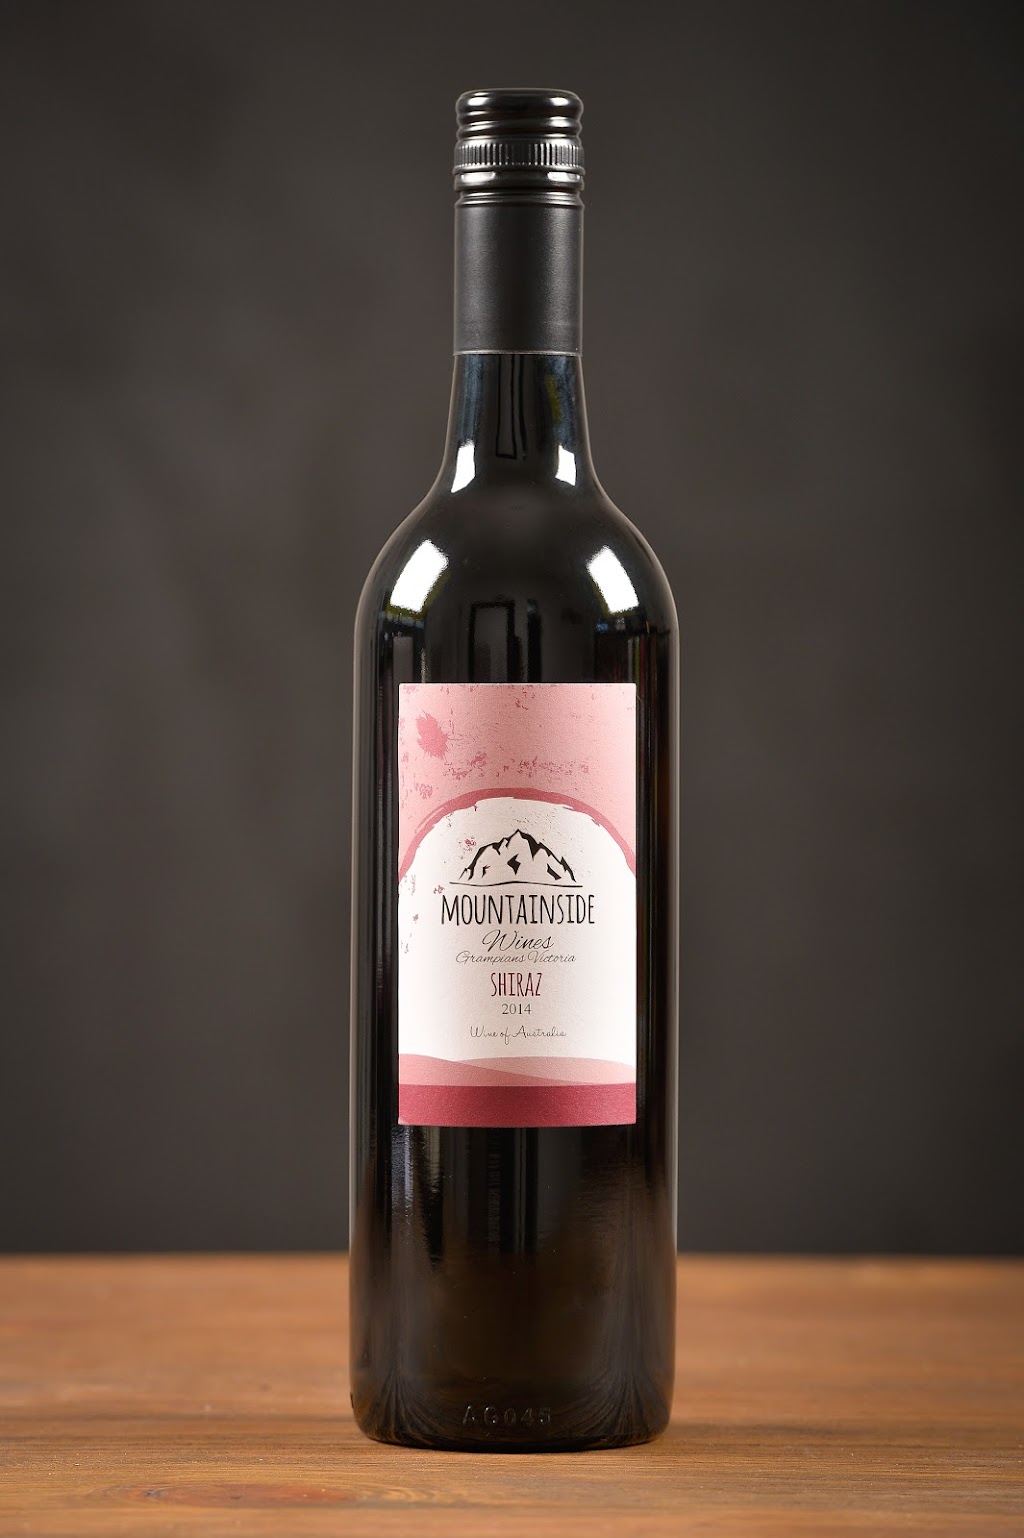 Mountainside Wines Pty Ltd | food | 197 Mount Cole Rd, Warrak VIC 3377, Australia | 0353543279 OR +61 3 5354 3279